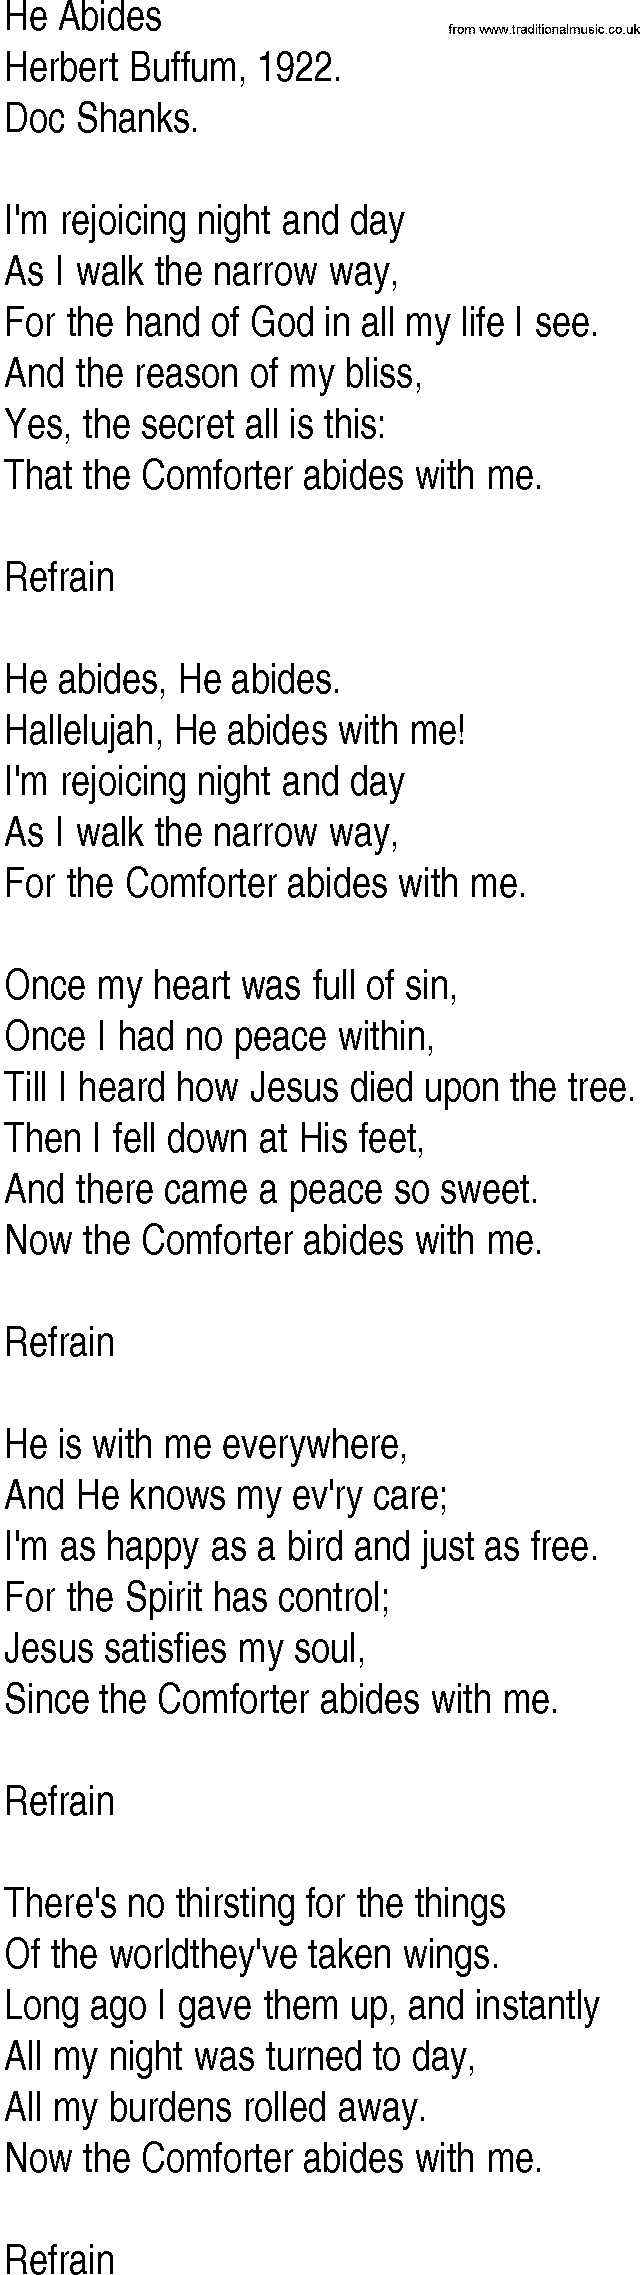 Hymn and Gospel Song: He Abides by Herbert Buffum lyrics